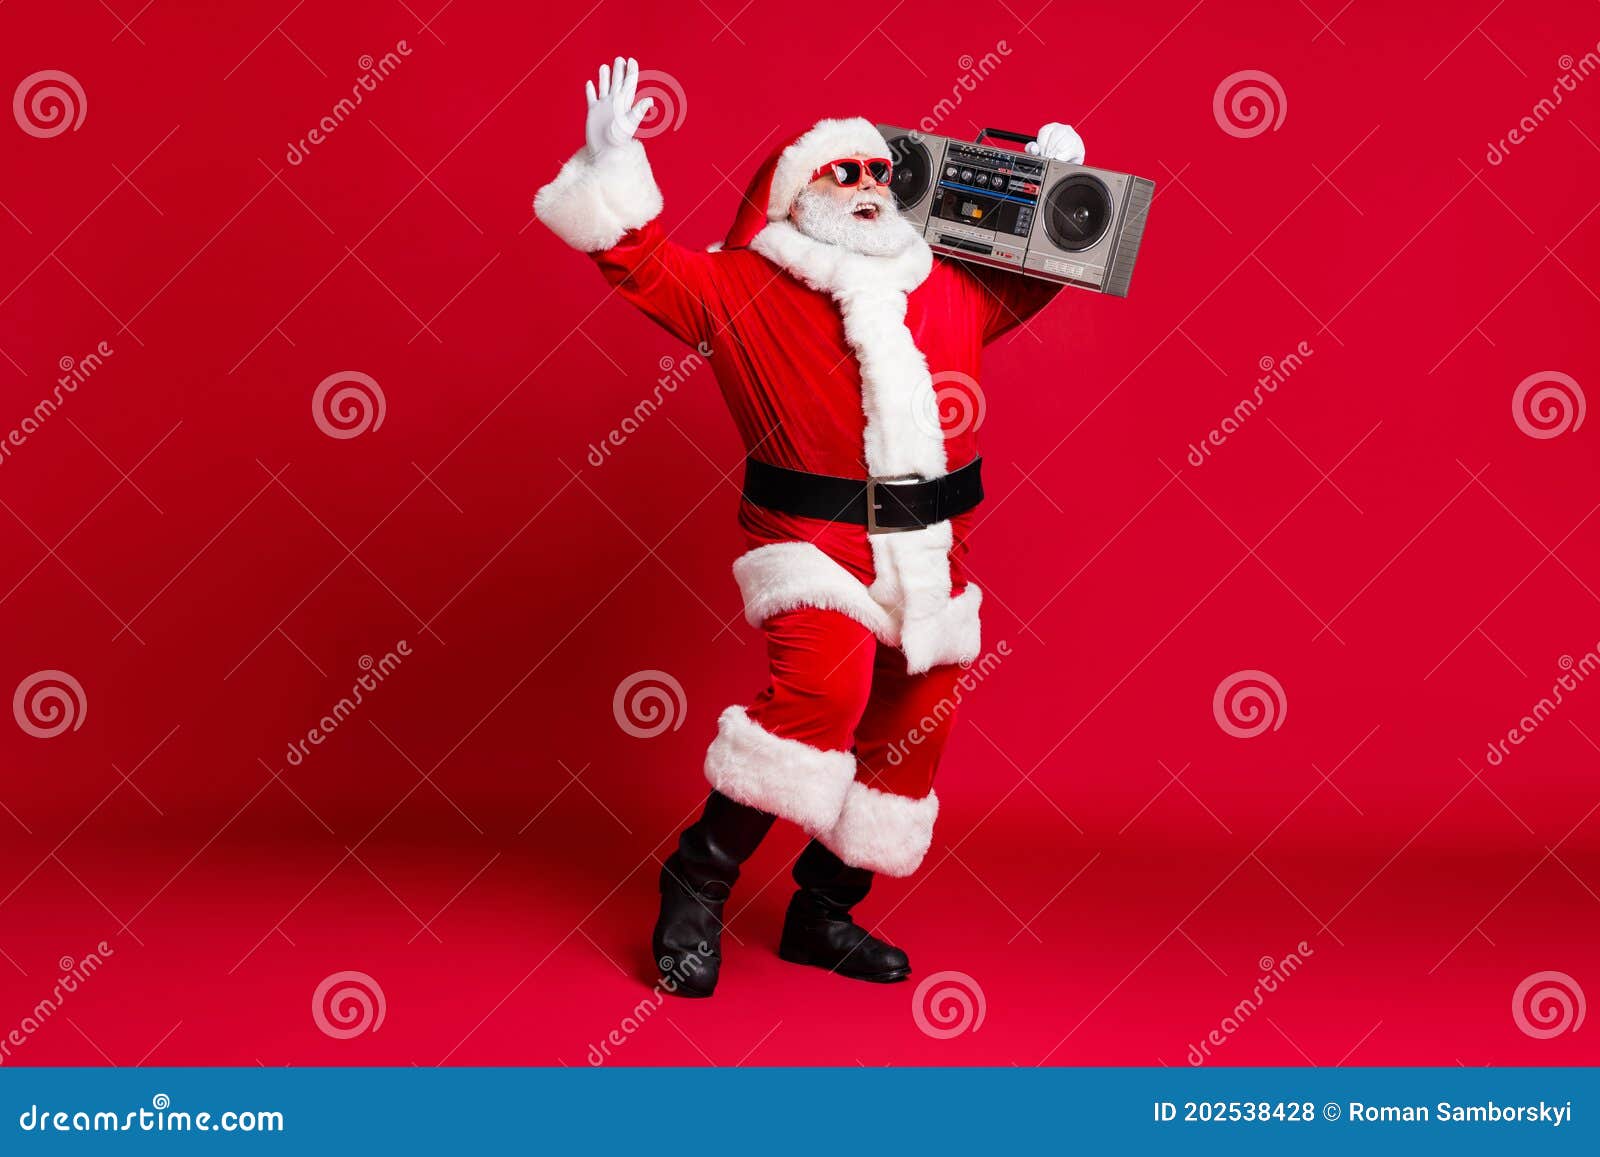 full length photo of pensioner old man white beard raise hand hold retro radio carefree wear x-mas santa costume gloves